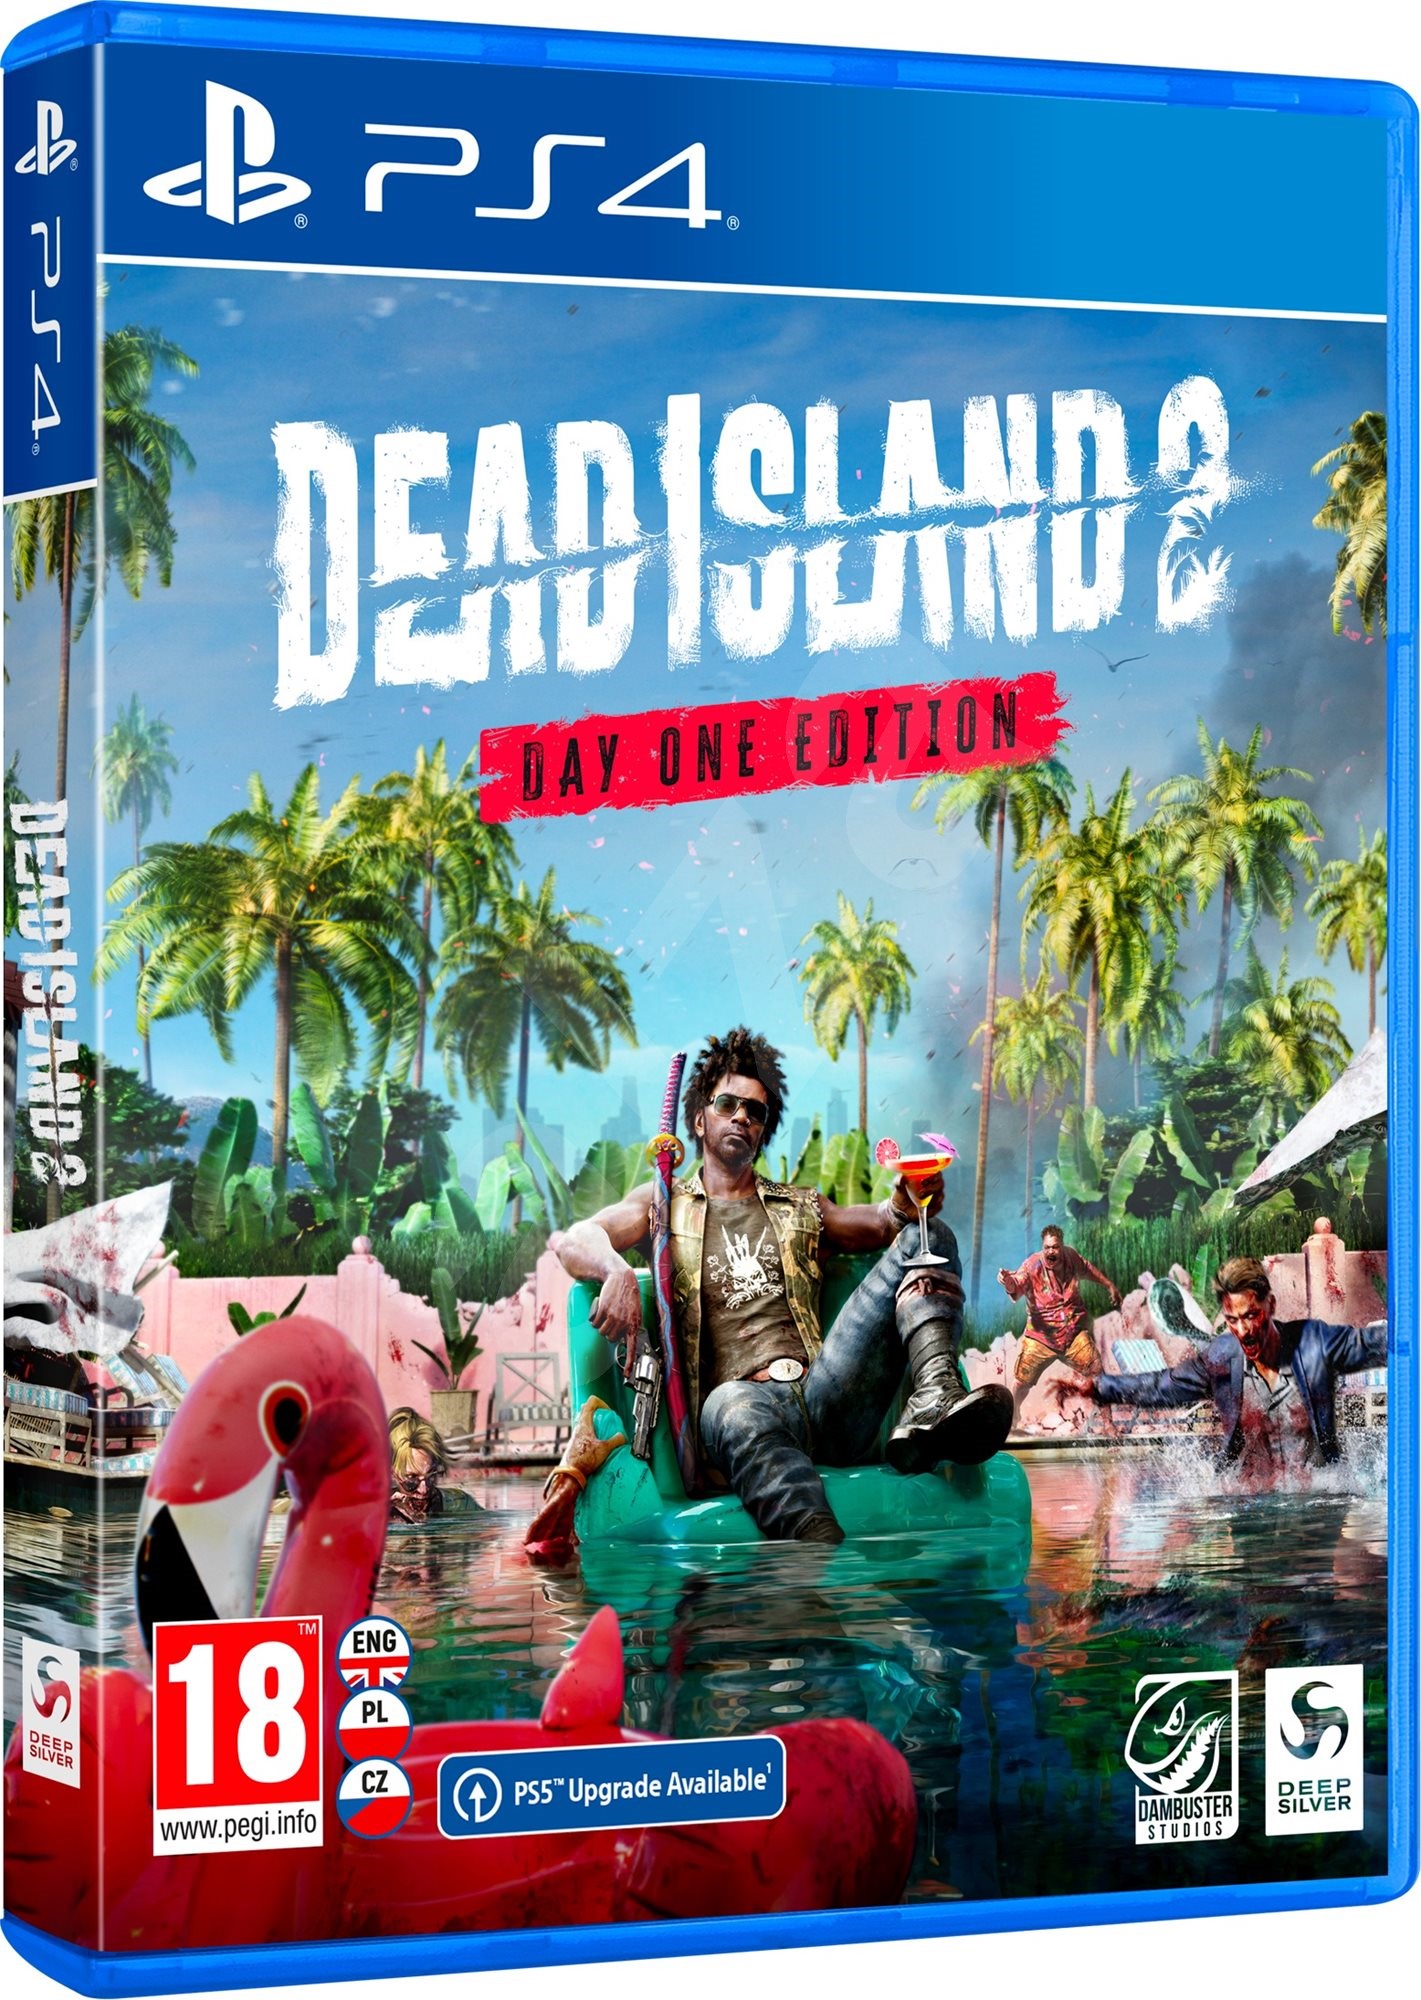 ps4 games dead island 2